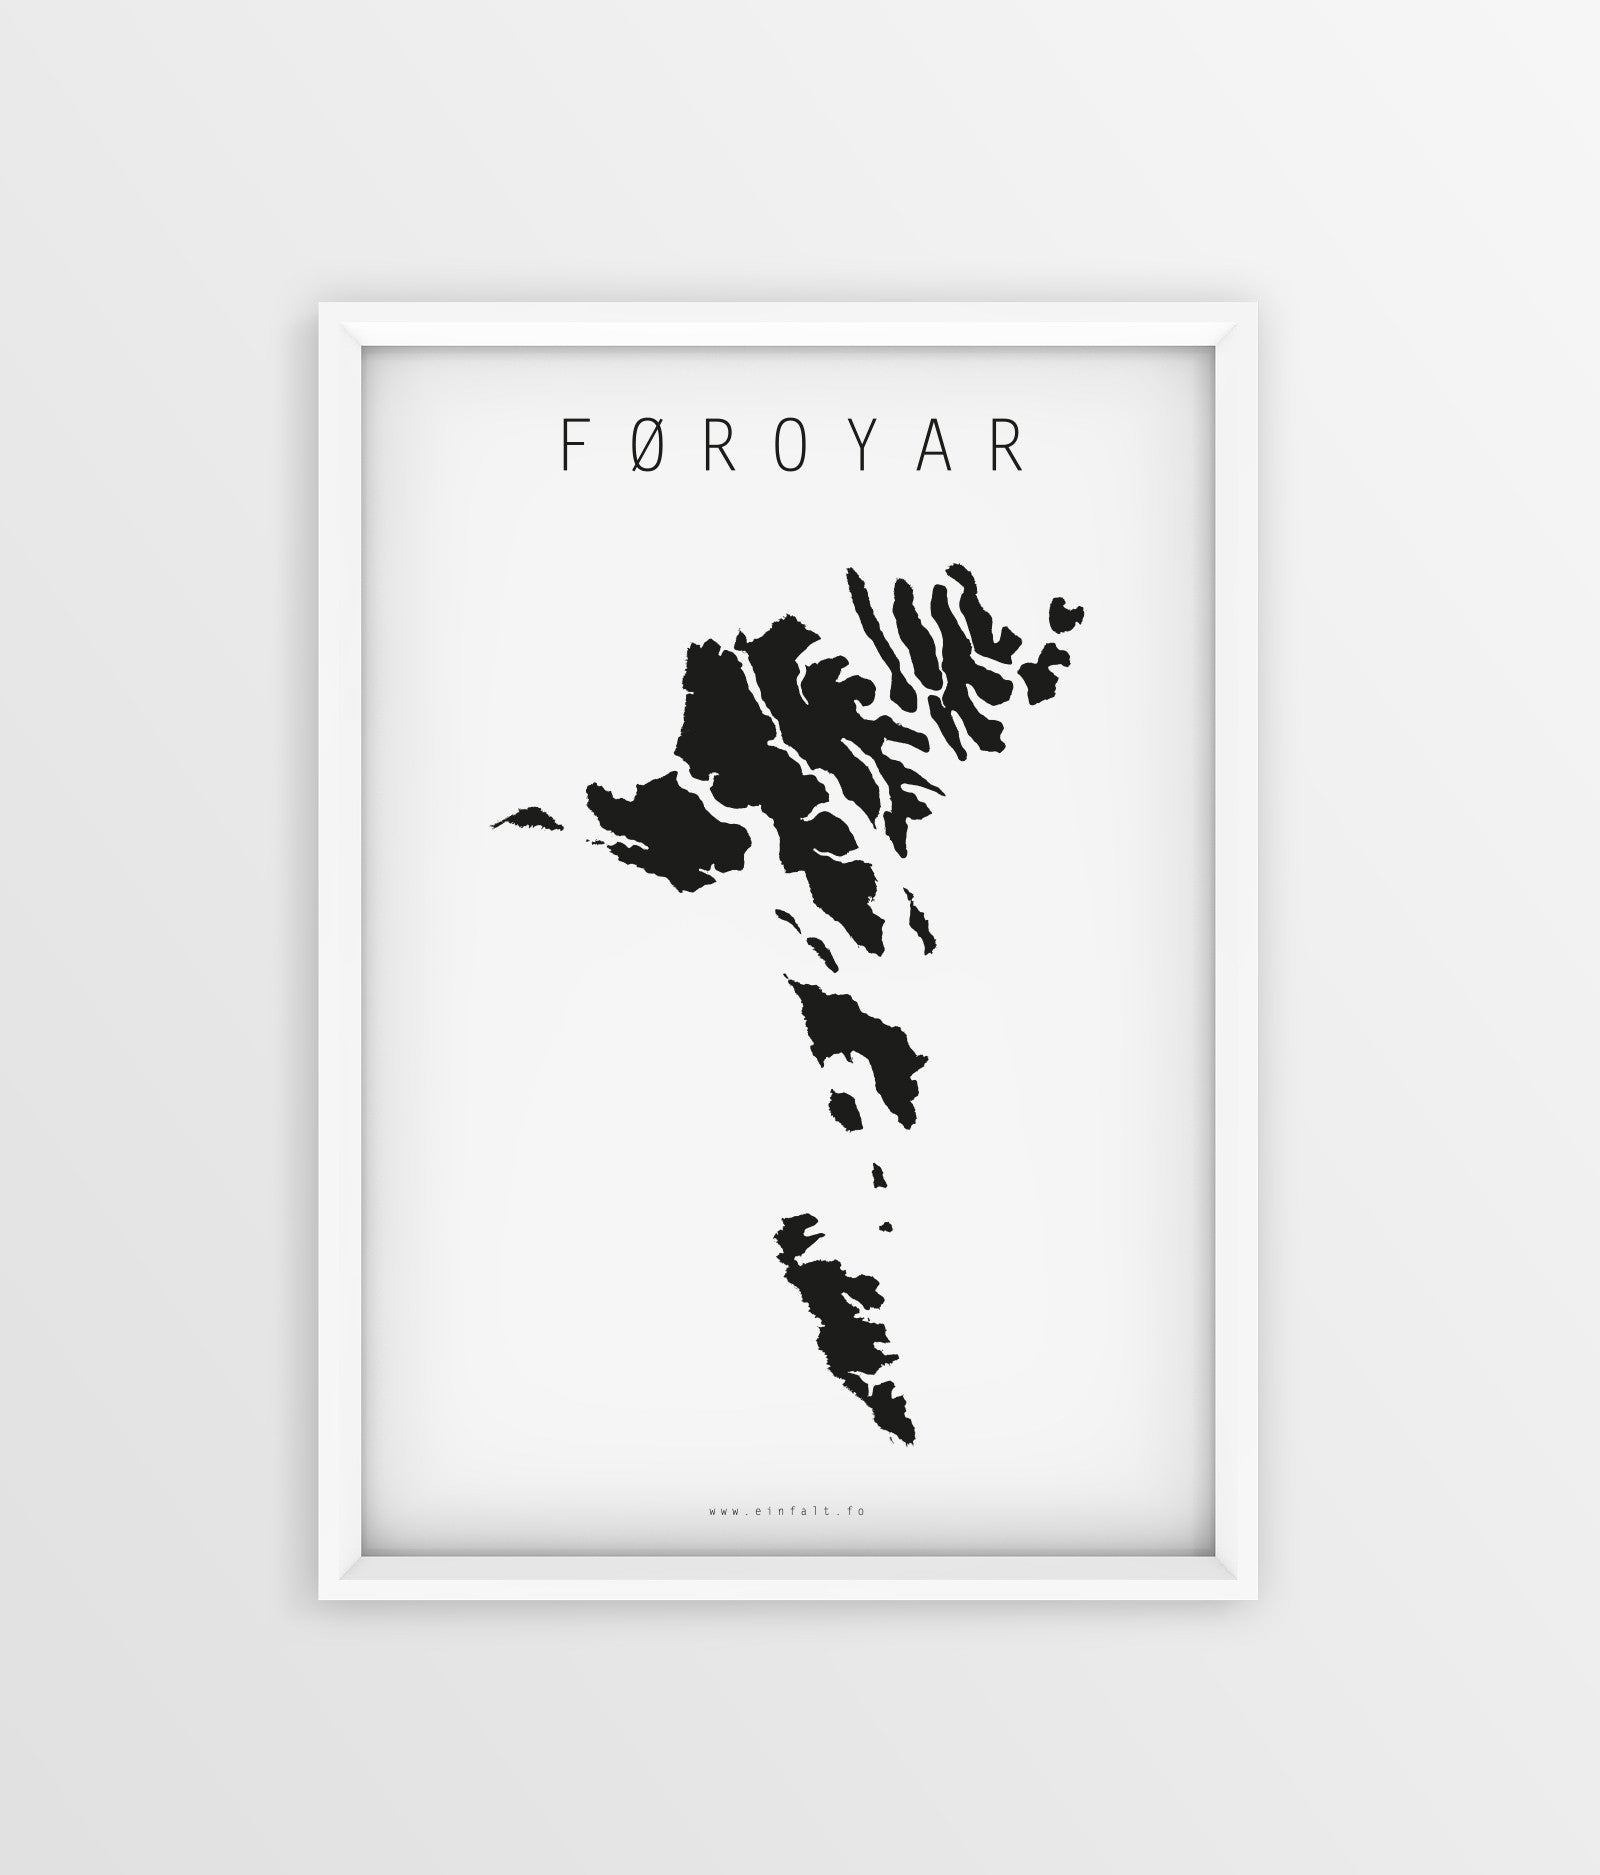 Føroyskar Plakatir - Faroe islands posters - Færøske plakater - Føroyar - Færøerne - Føroyakort